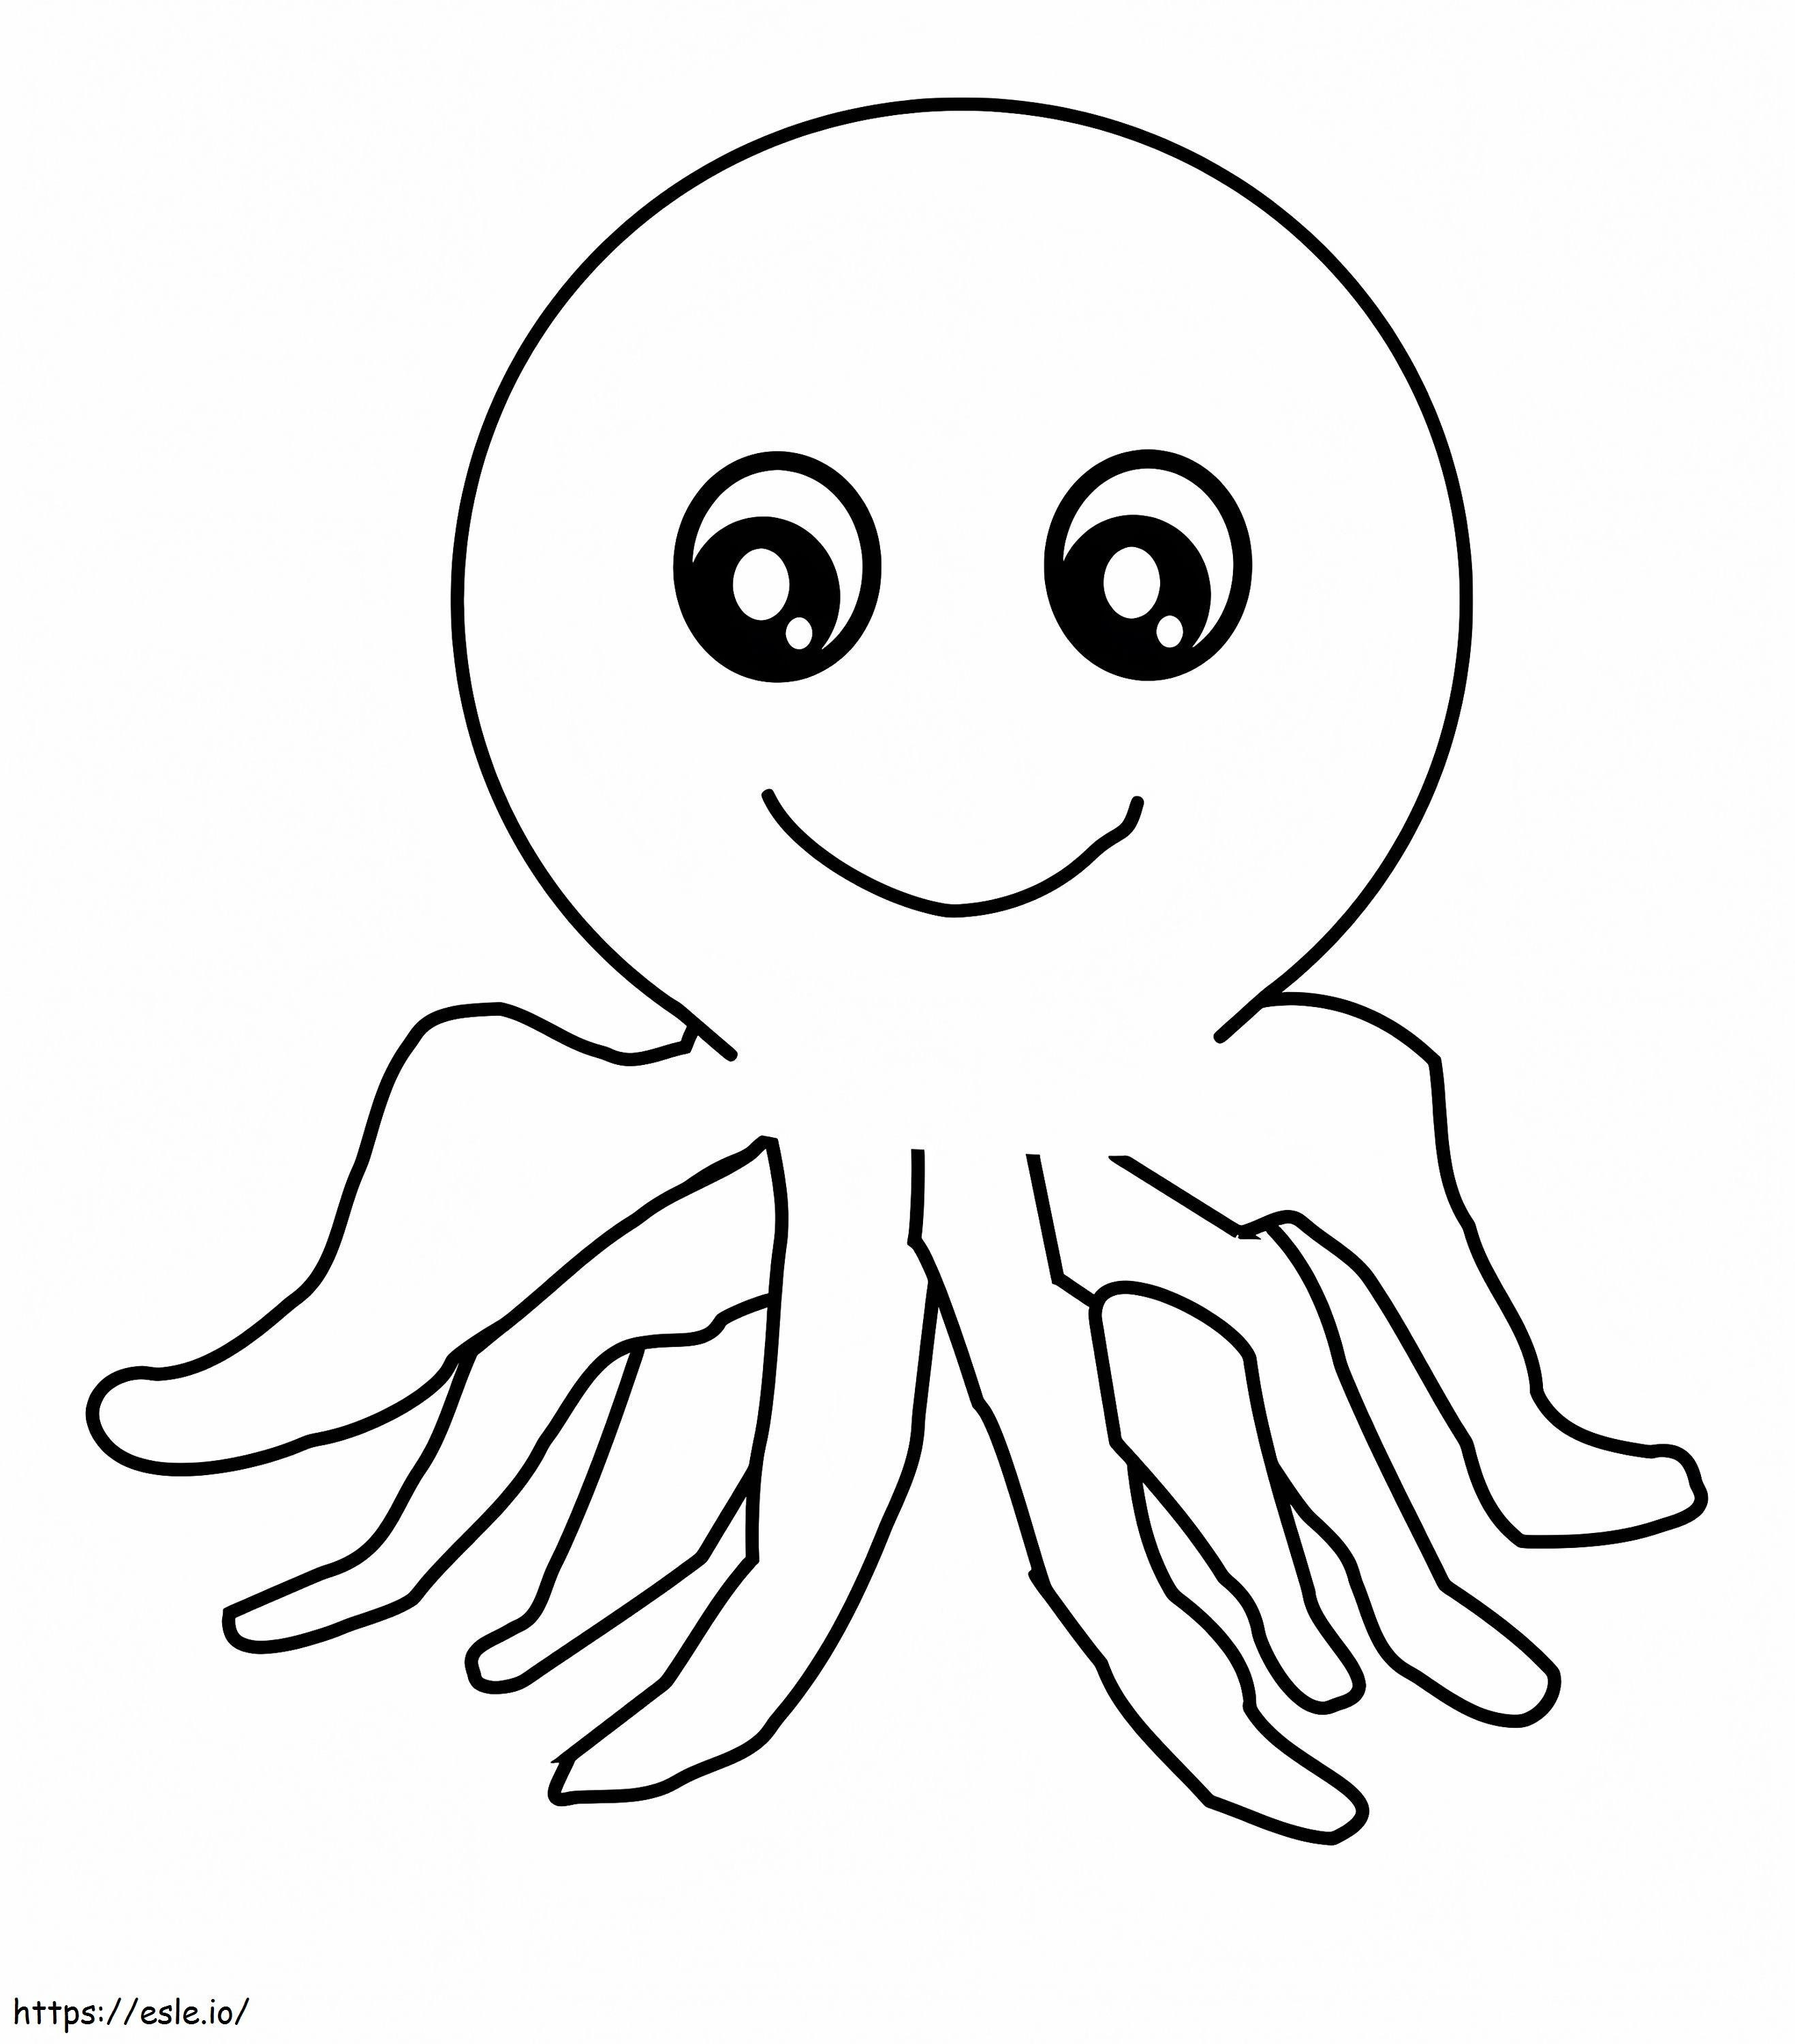 1559728771 Cartoon Octopus A4 coloring page